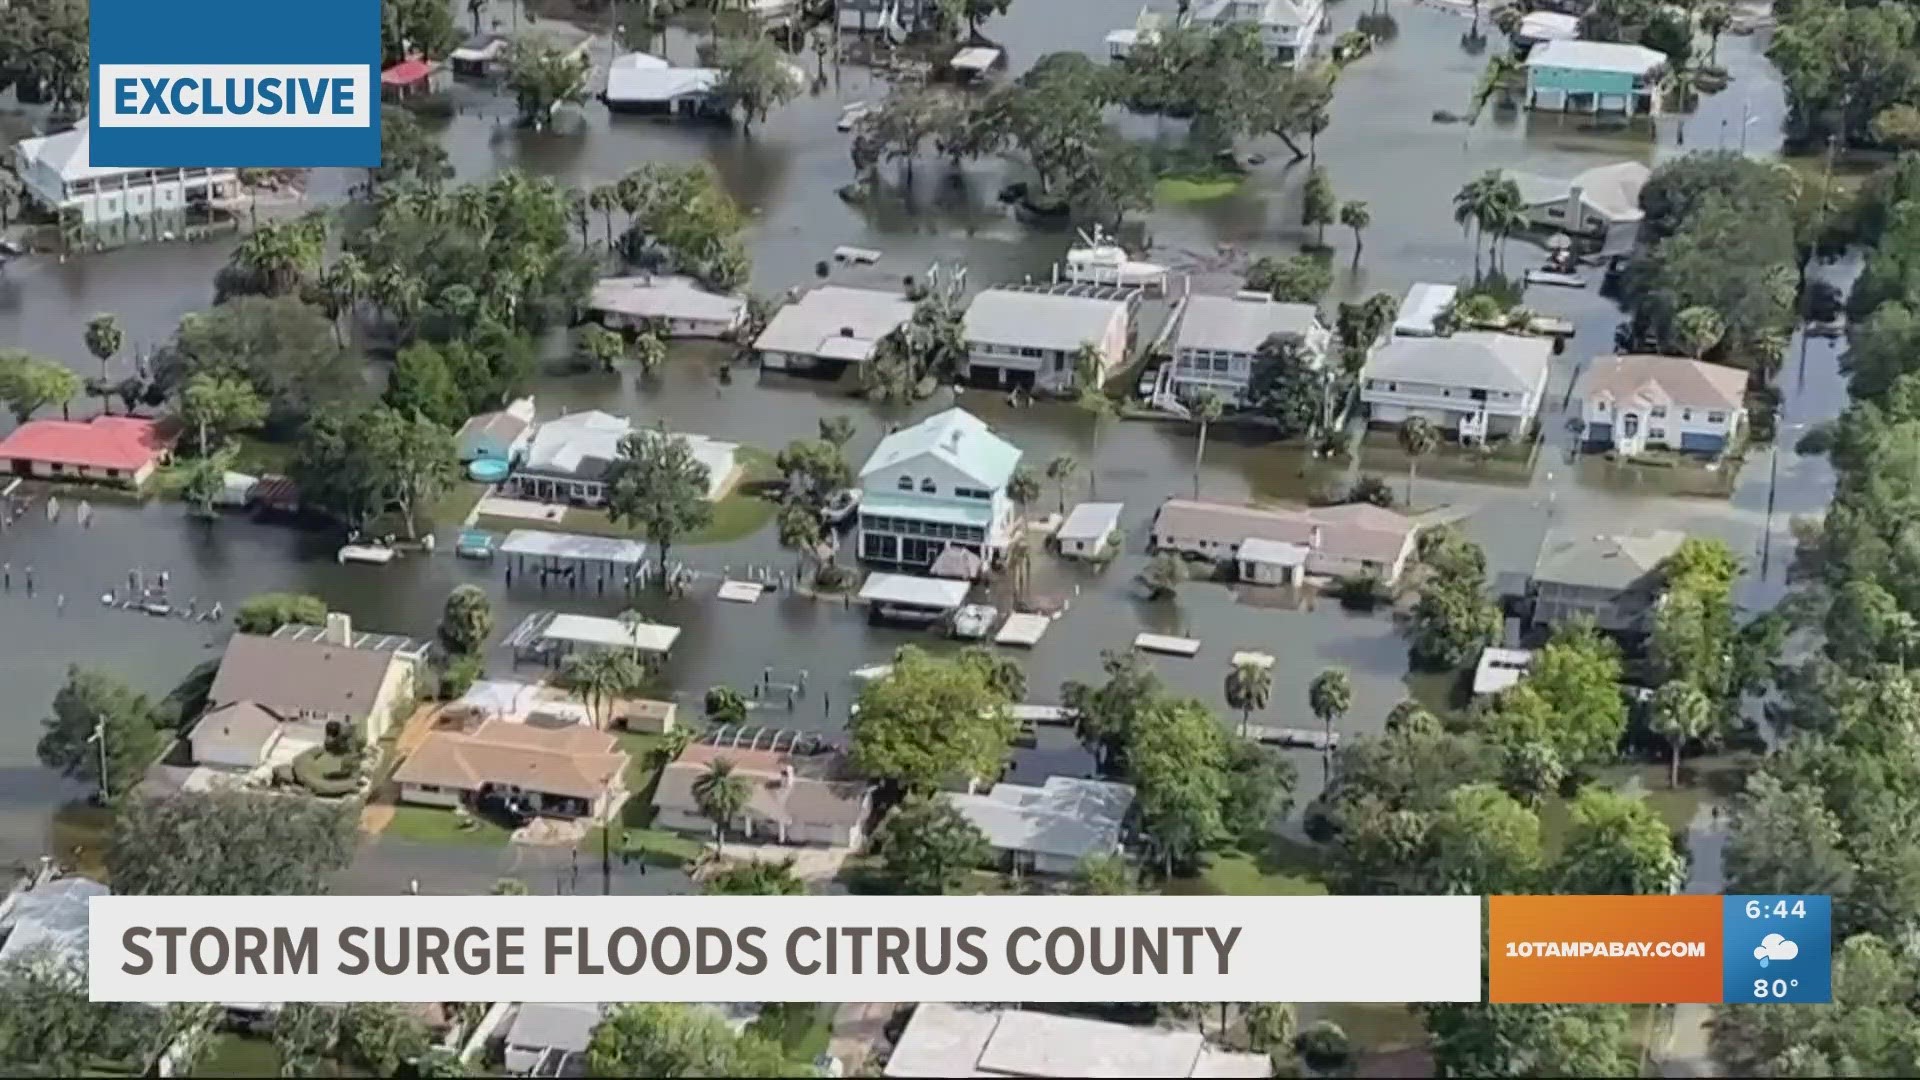 Hurricane Idalia has left widespread damage as neighborhoods are still severely flooded.